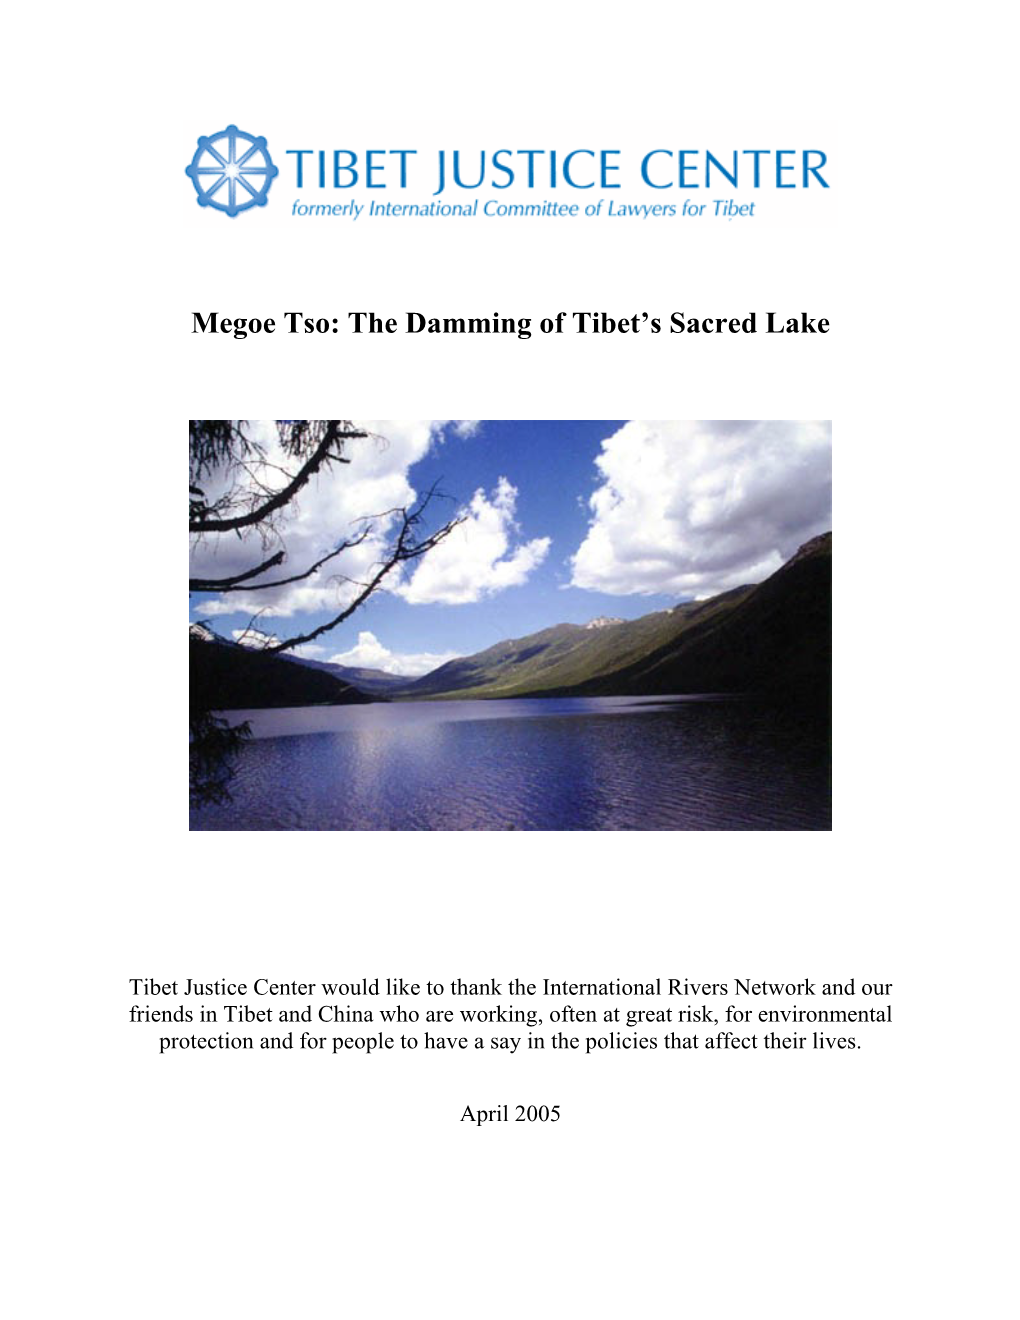 Megoe Tso: the Damming of Tibet's Sacred Lake